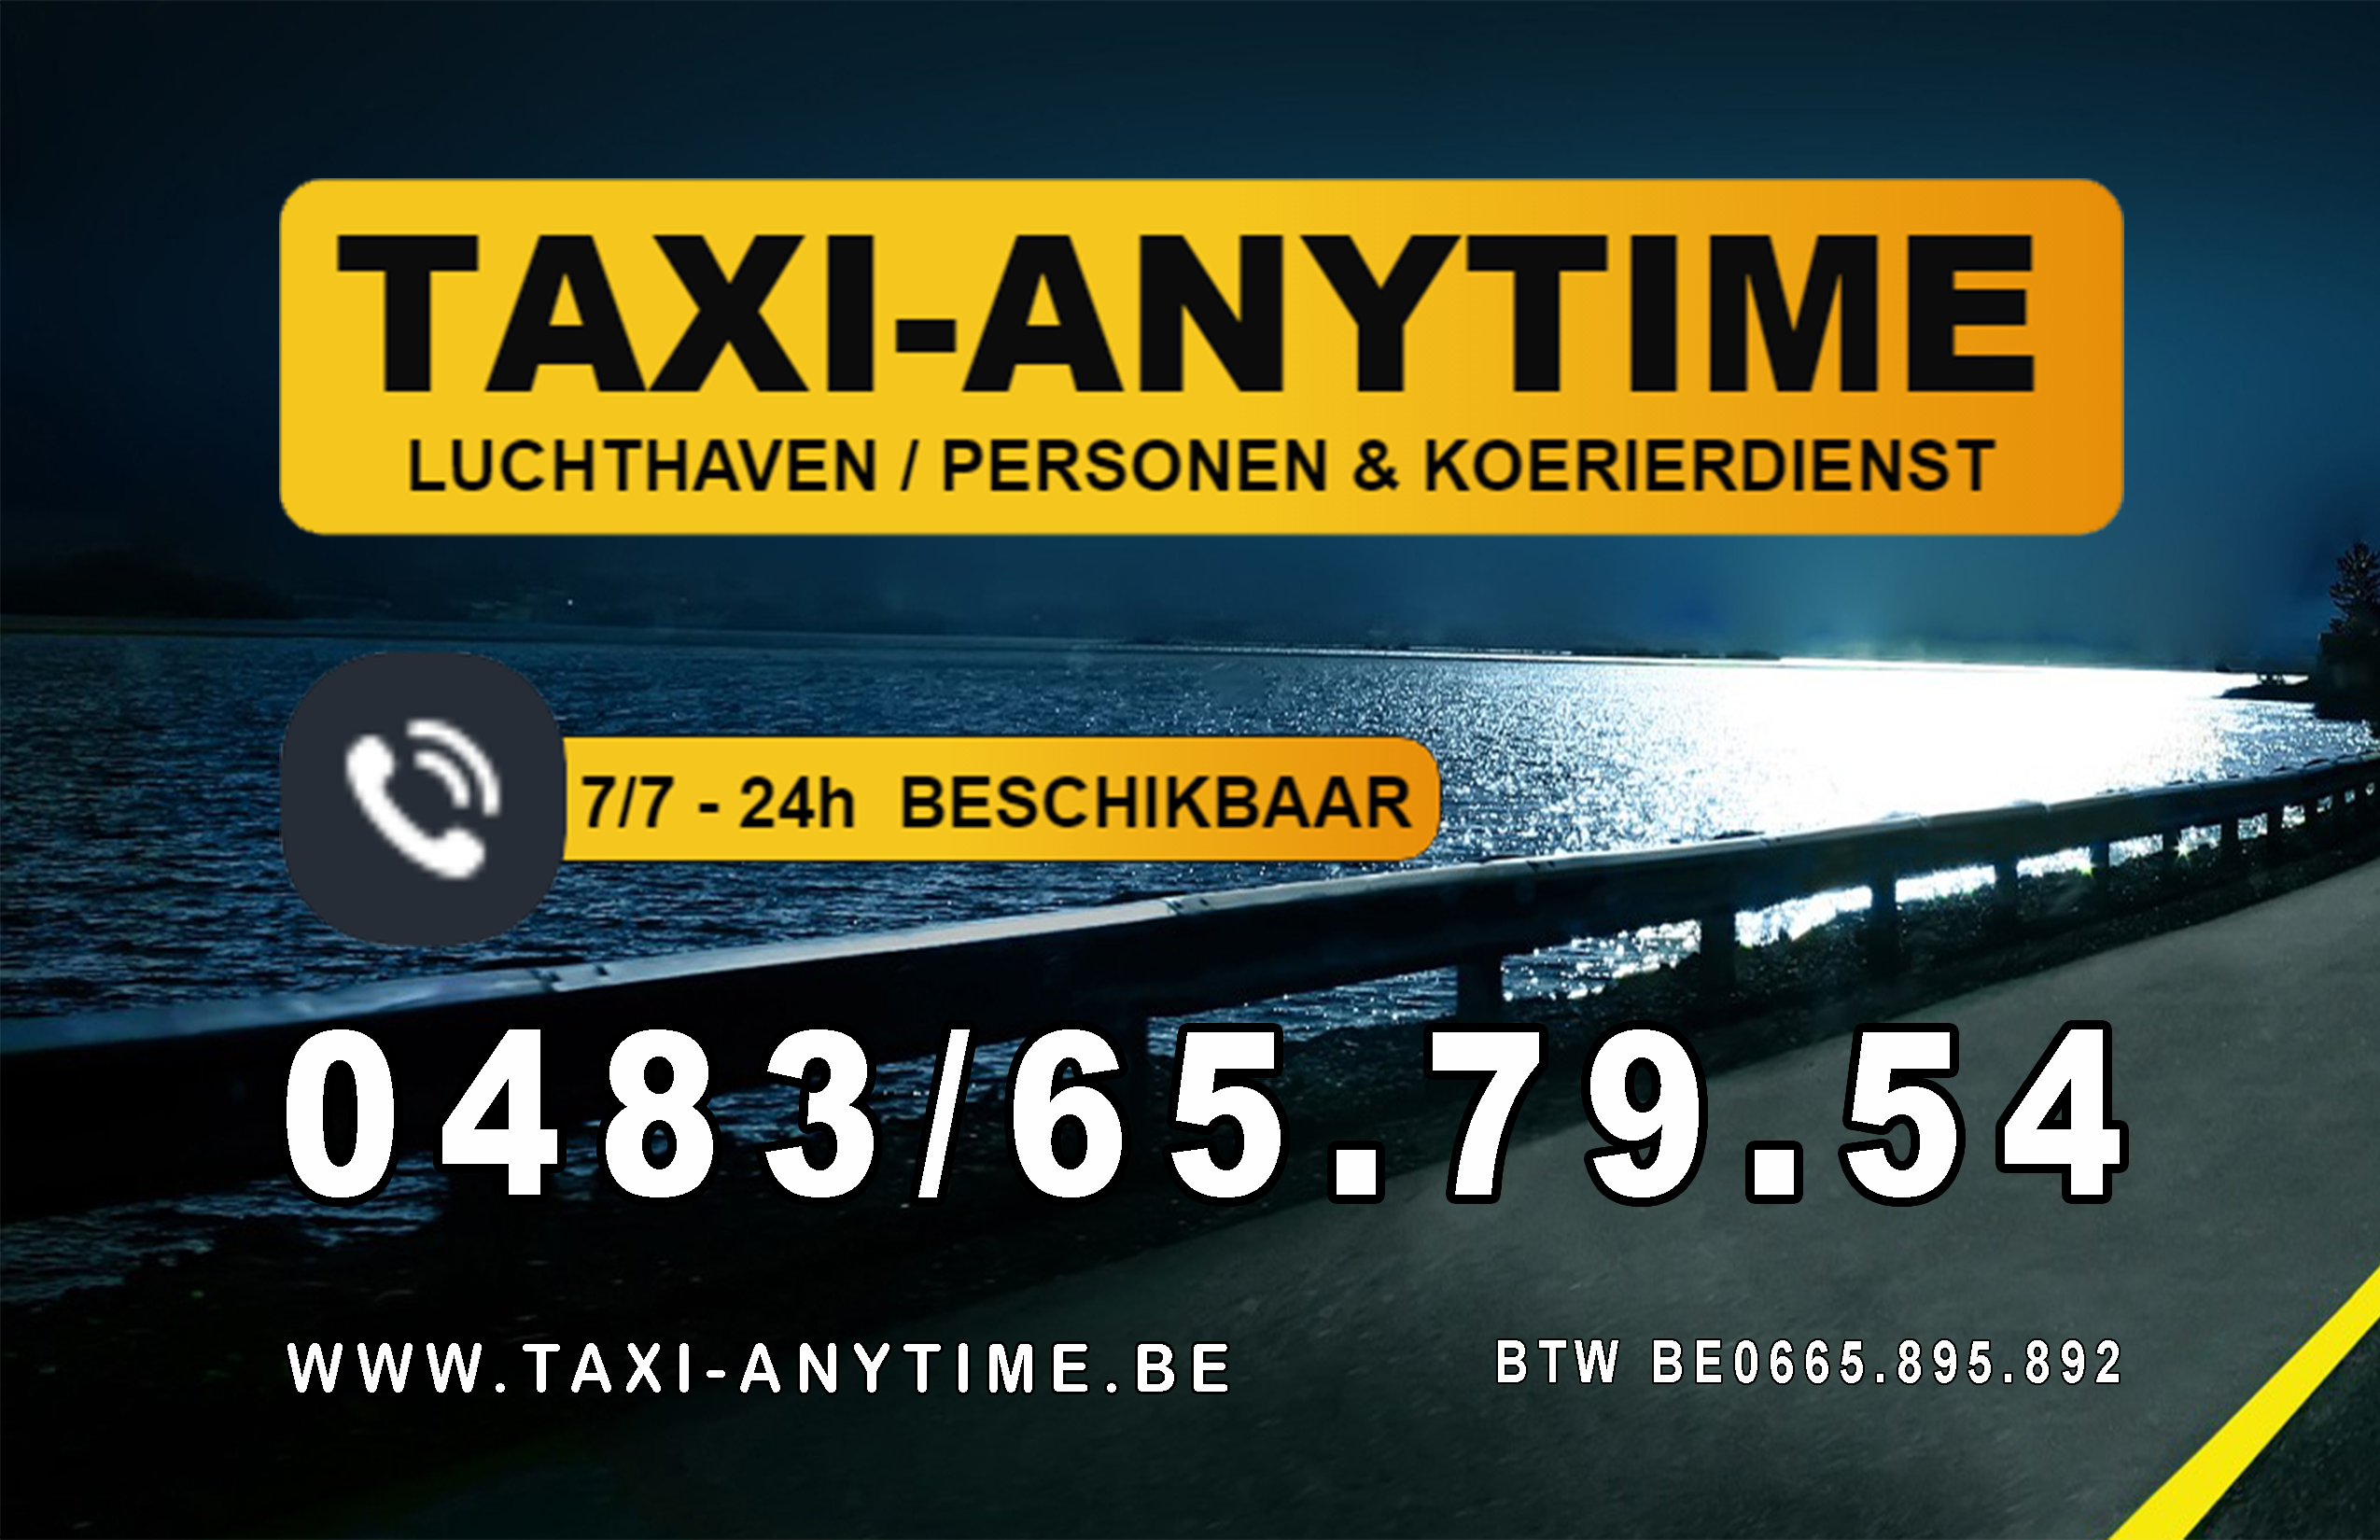 transportbedrijven Antwerpen Taxi-anytime